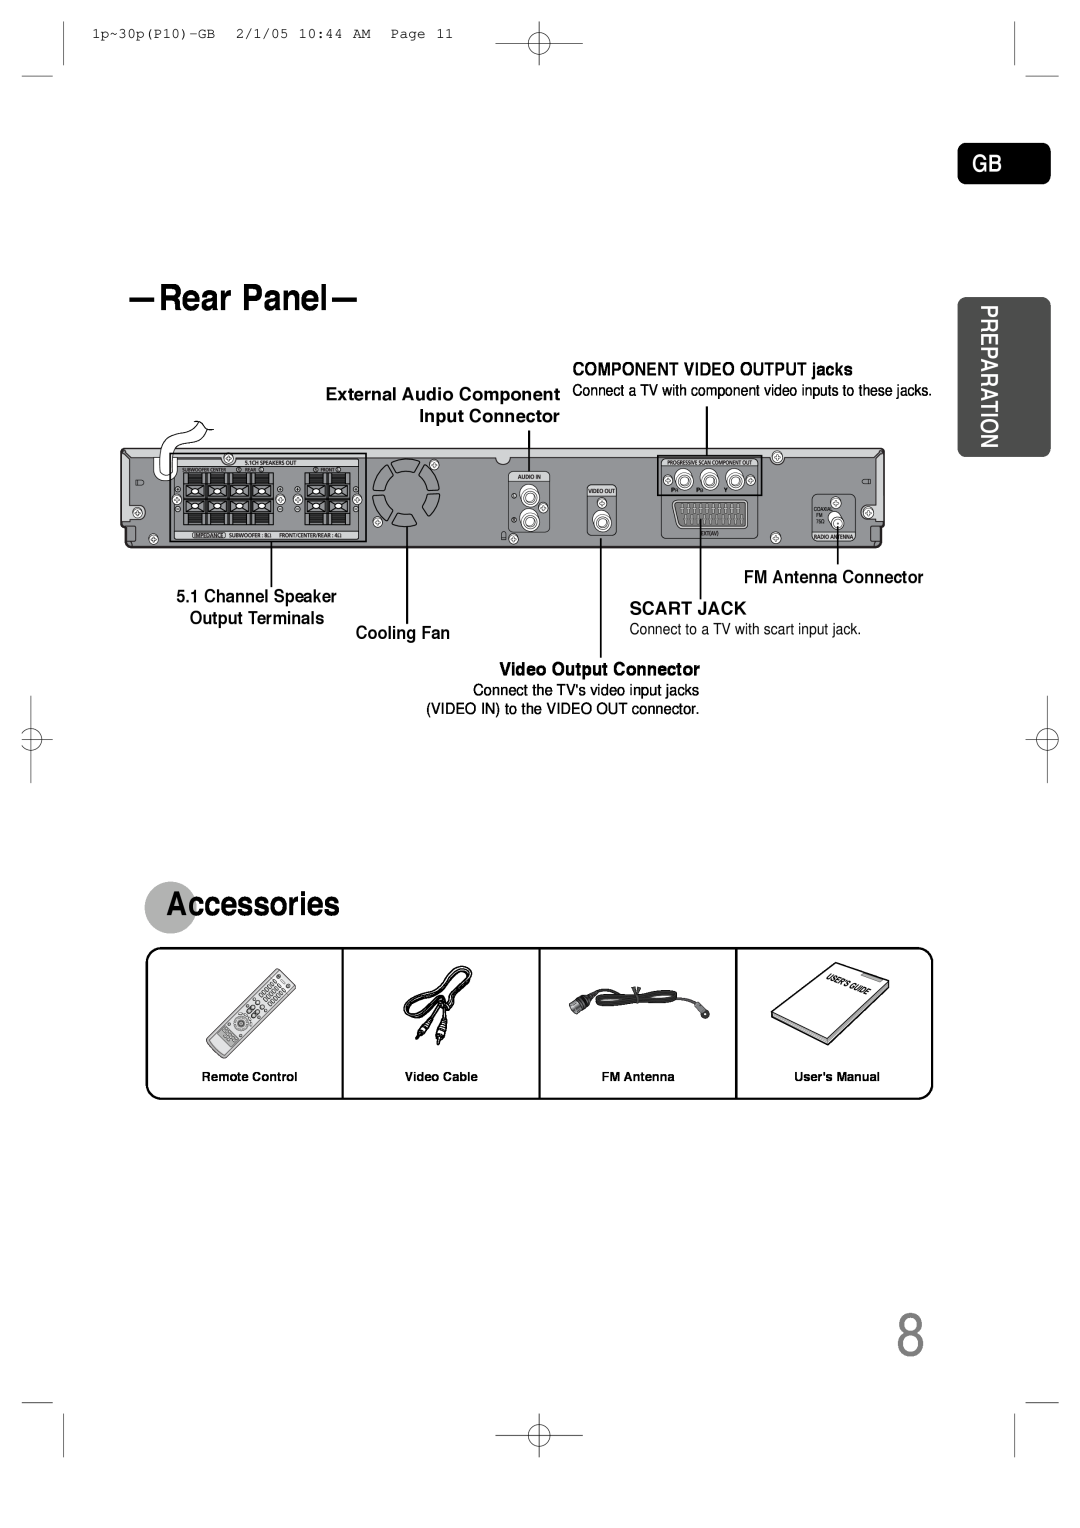 Samsung P10 RearPanel, Accessories, Preparation, COMPONENT VIDEO OUTPUT jacks, External Audio Component, Input Connector 